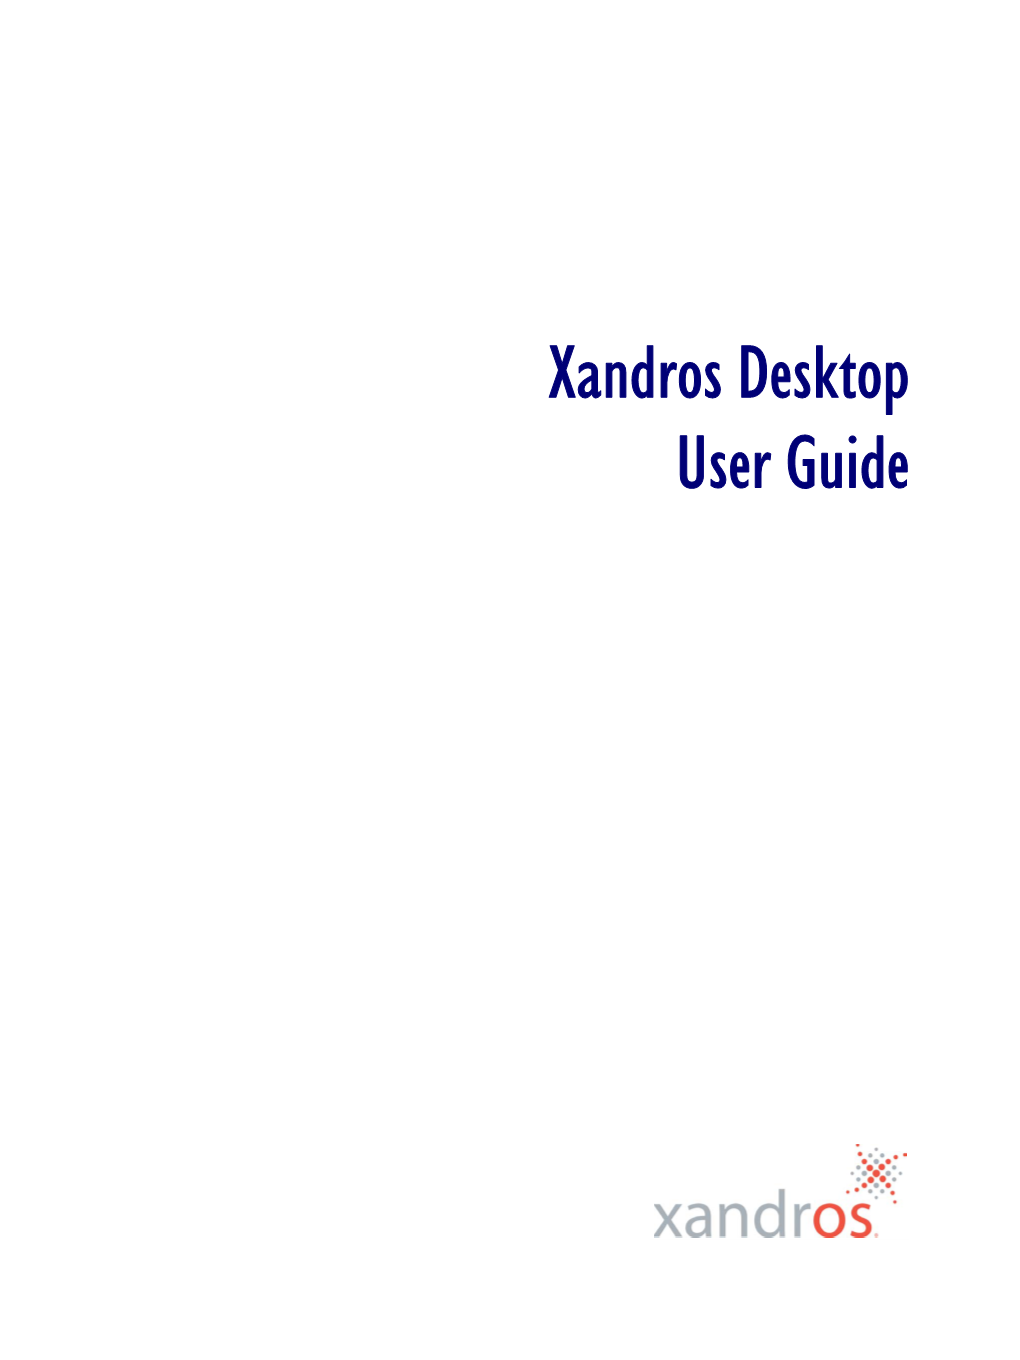 Xandros Desktop User Guide Xandrosug.Book Page 2 Friday, May 19, 2006 1:51 PM